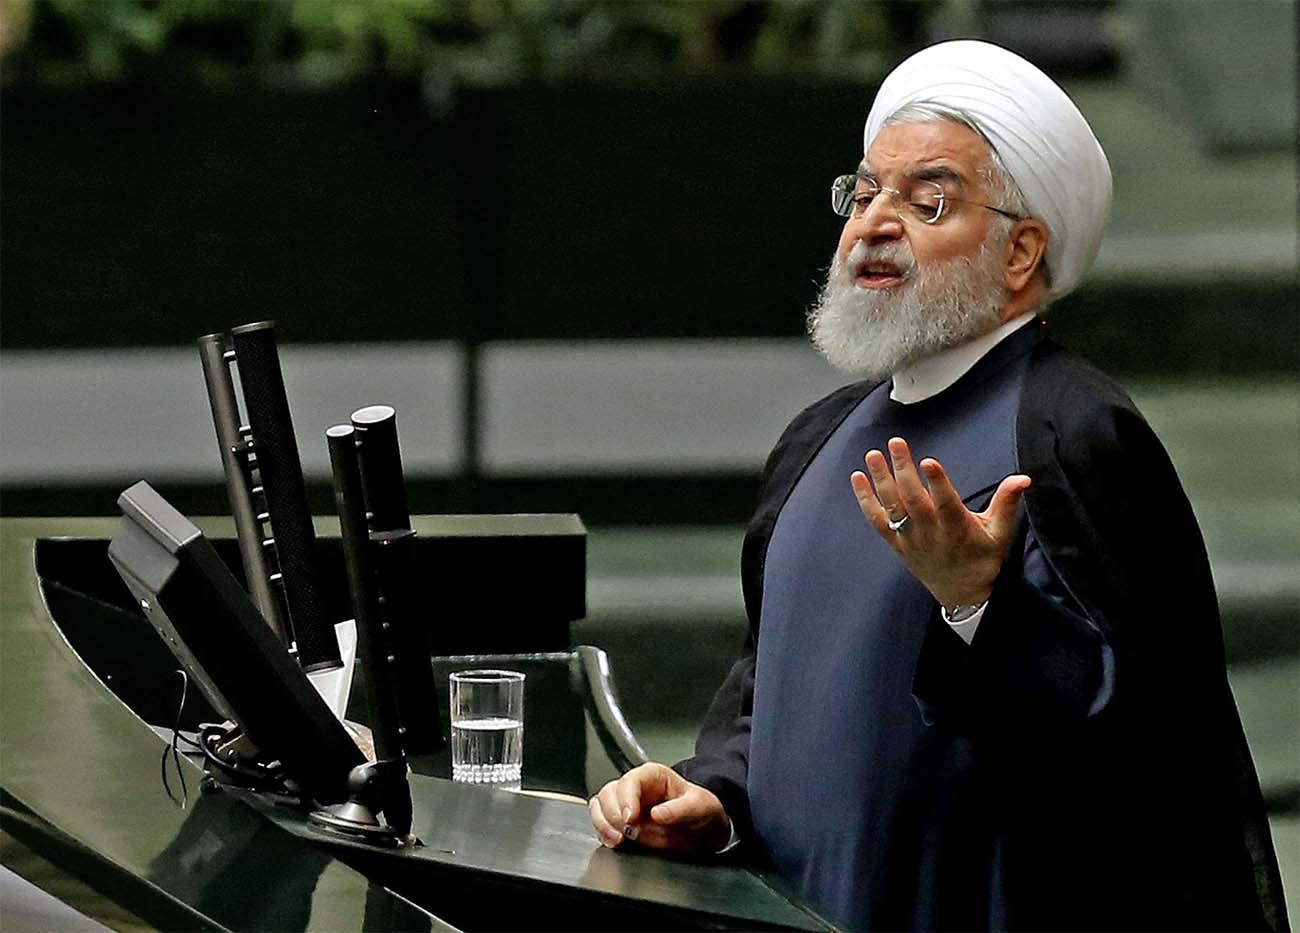 Iranian President Hassan Rouhani 